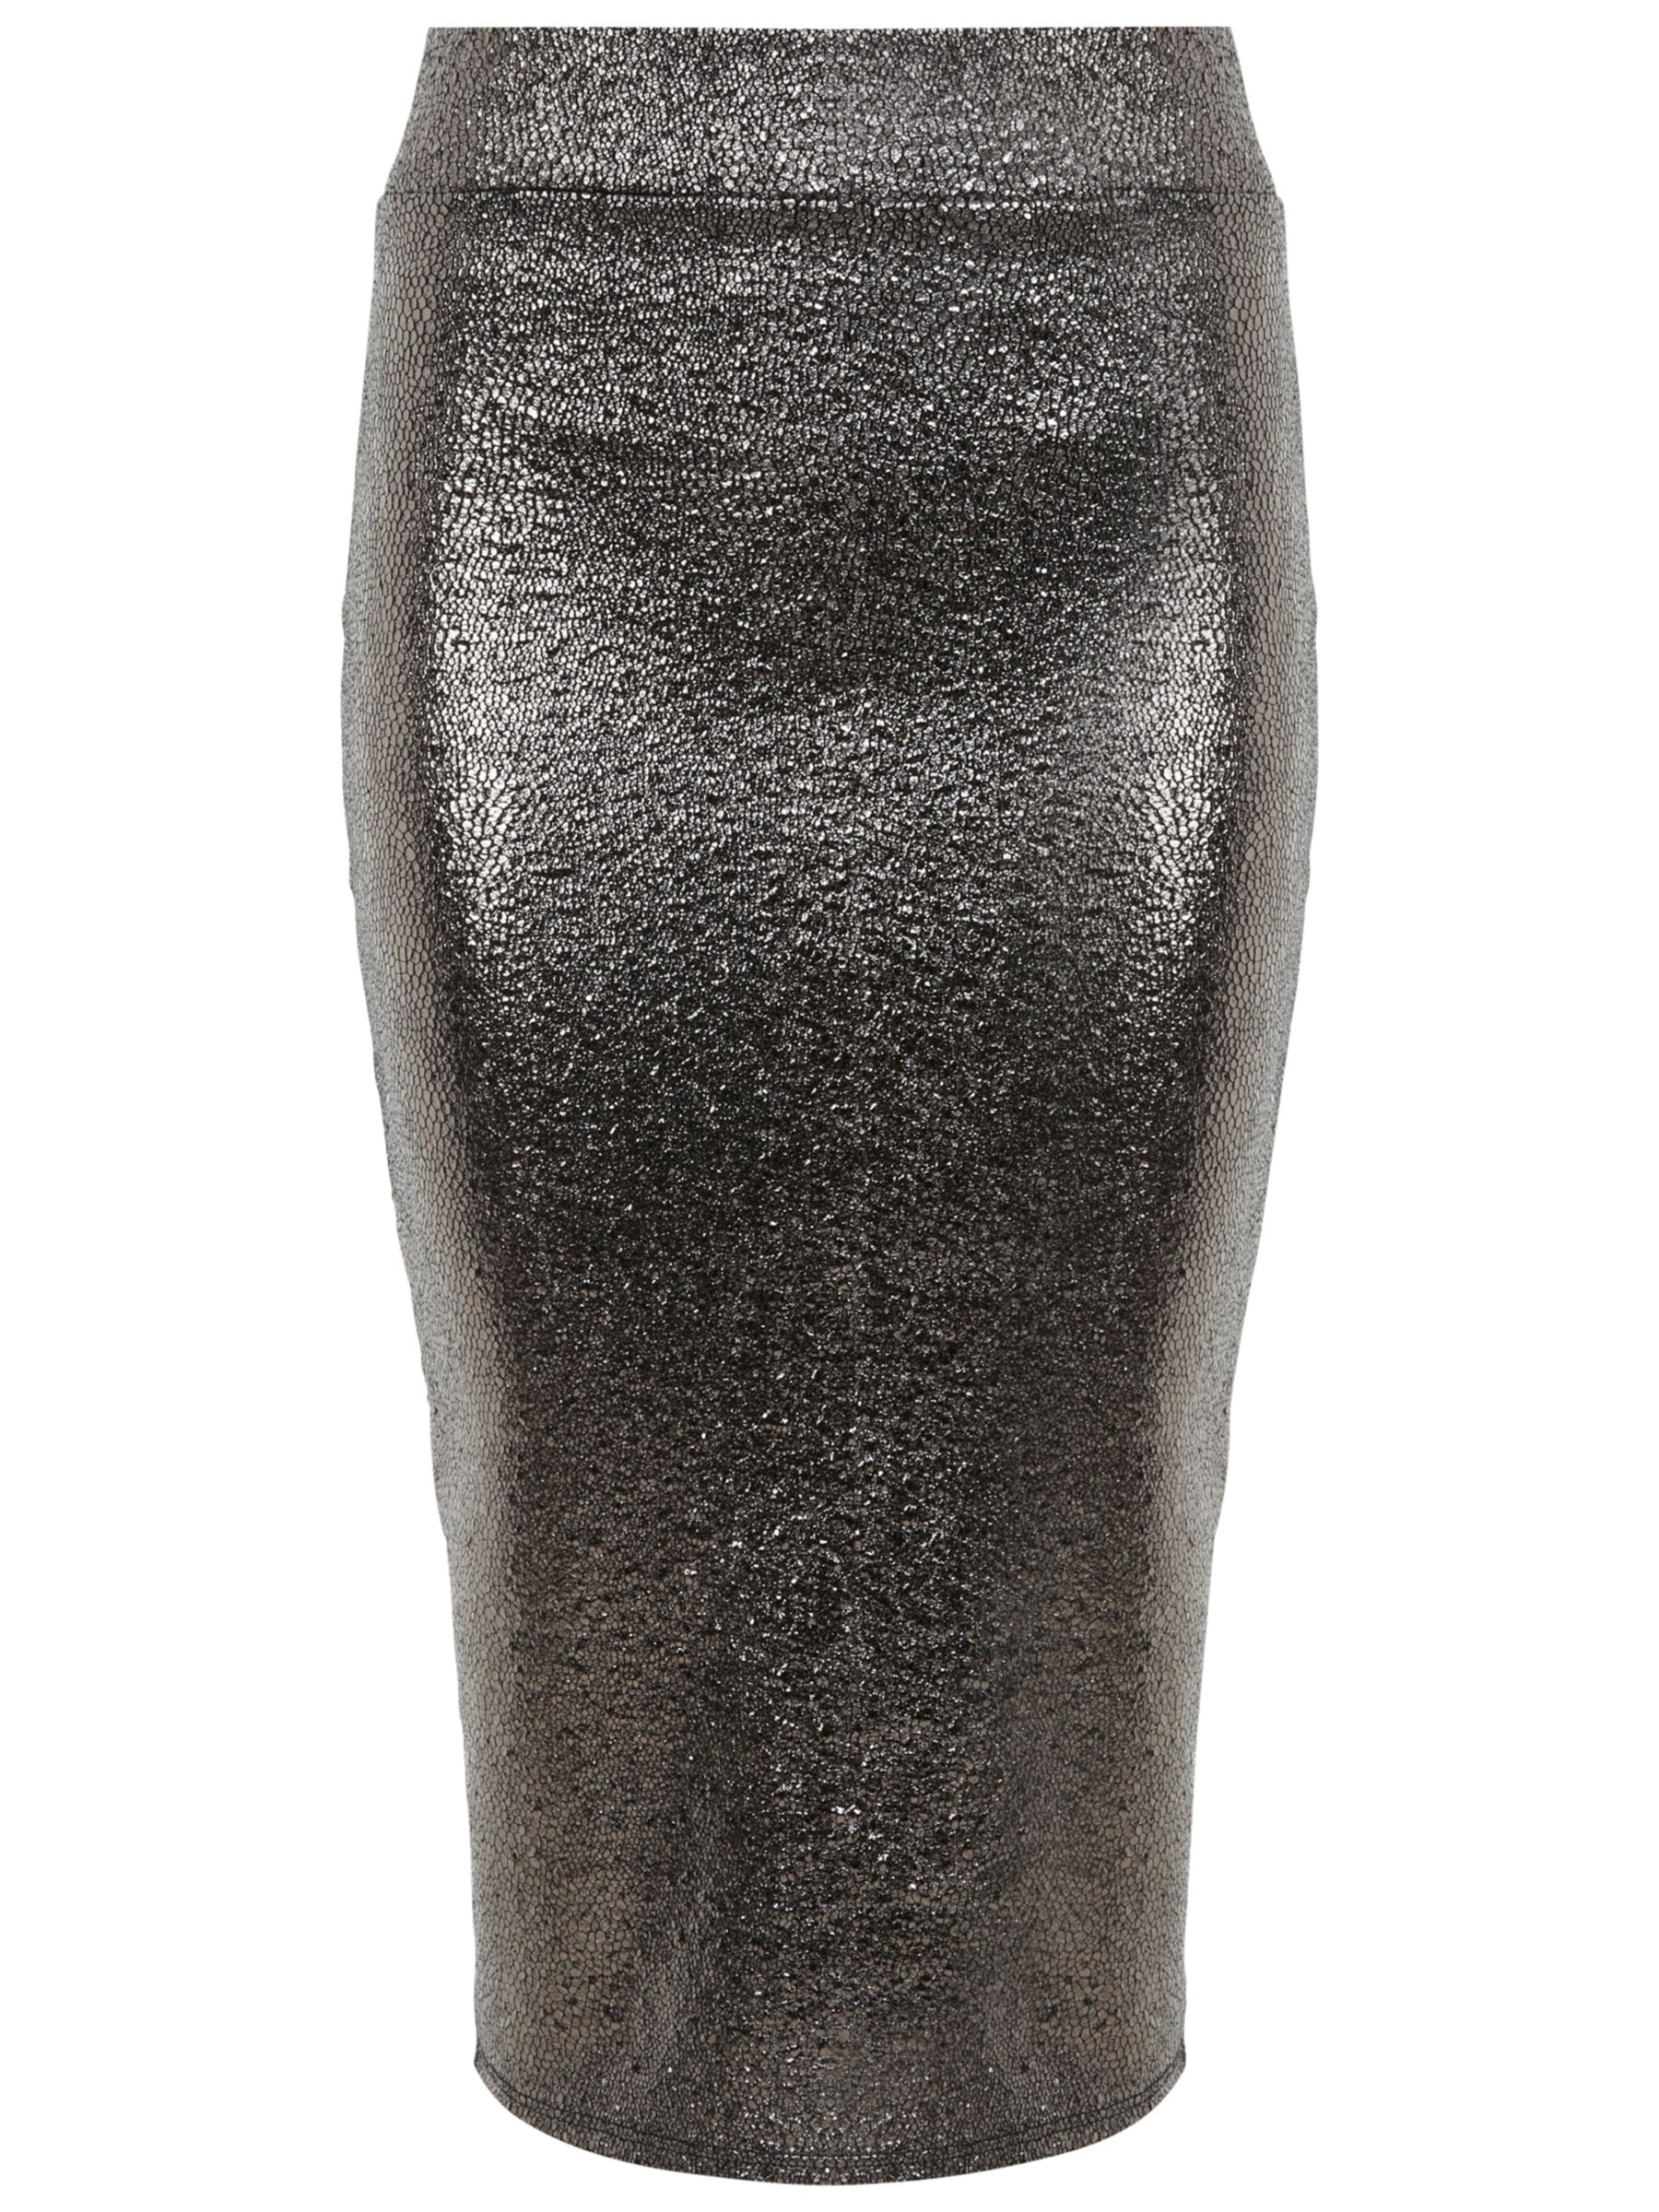 Miss Selfridge Metallic Pencil Skirt, Silver at John Lewis & Partners